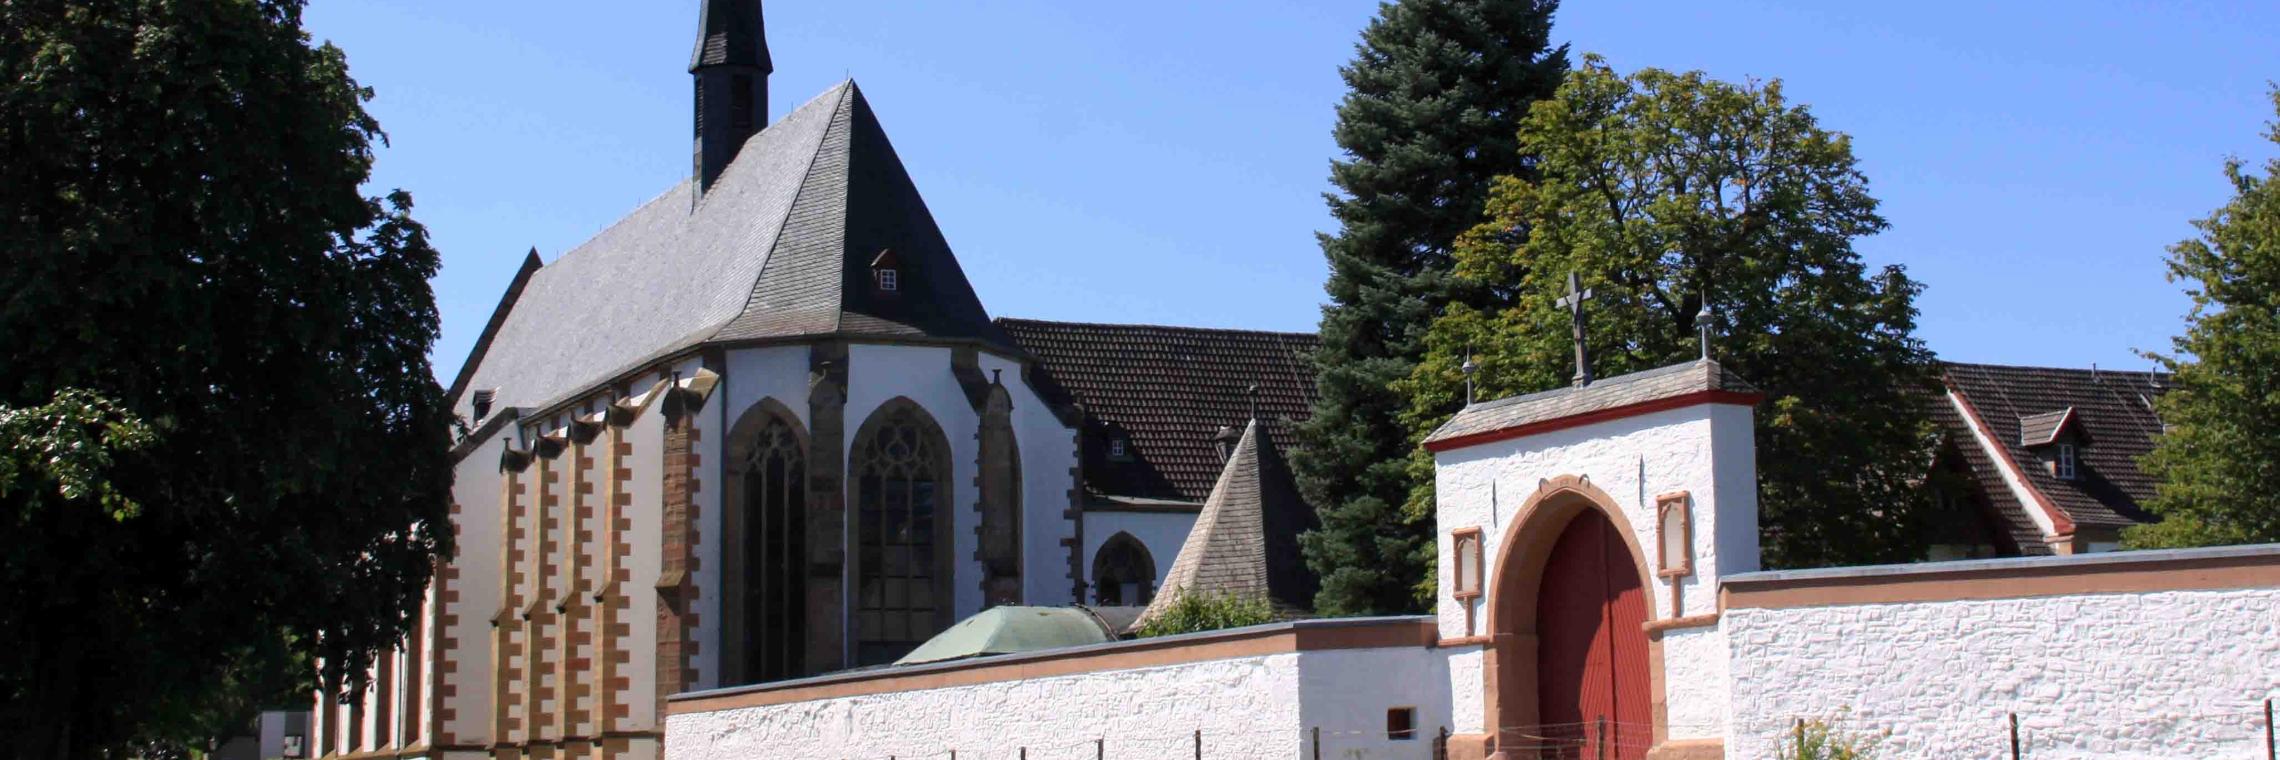 Abtei Mariawald Ostseite mit altem Ökonomietor